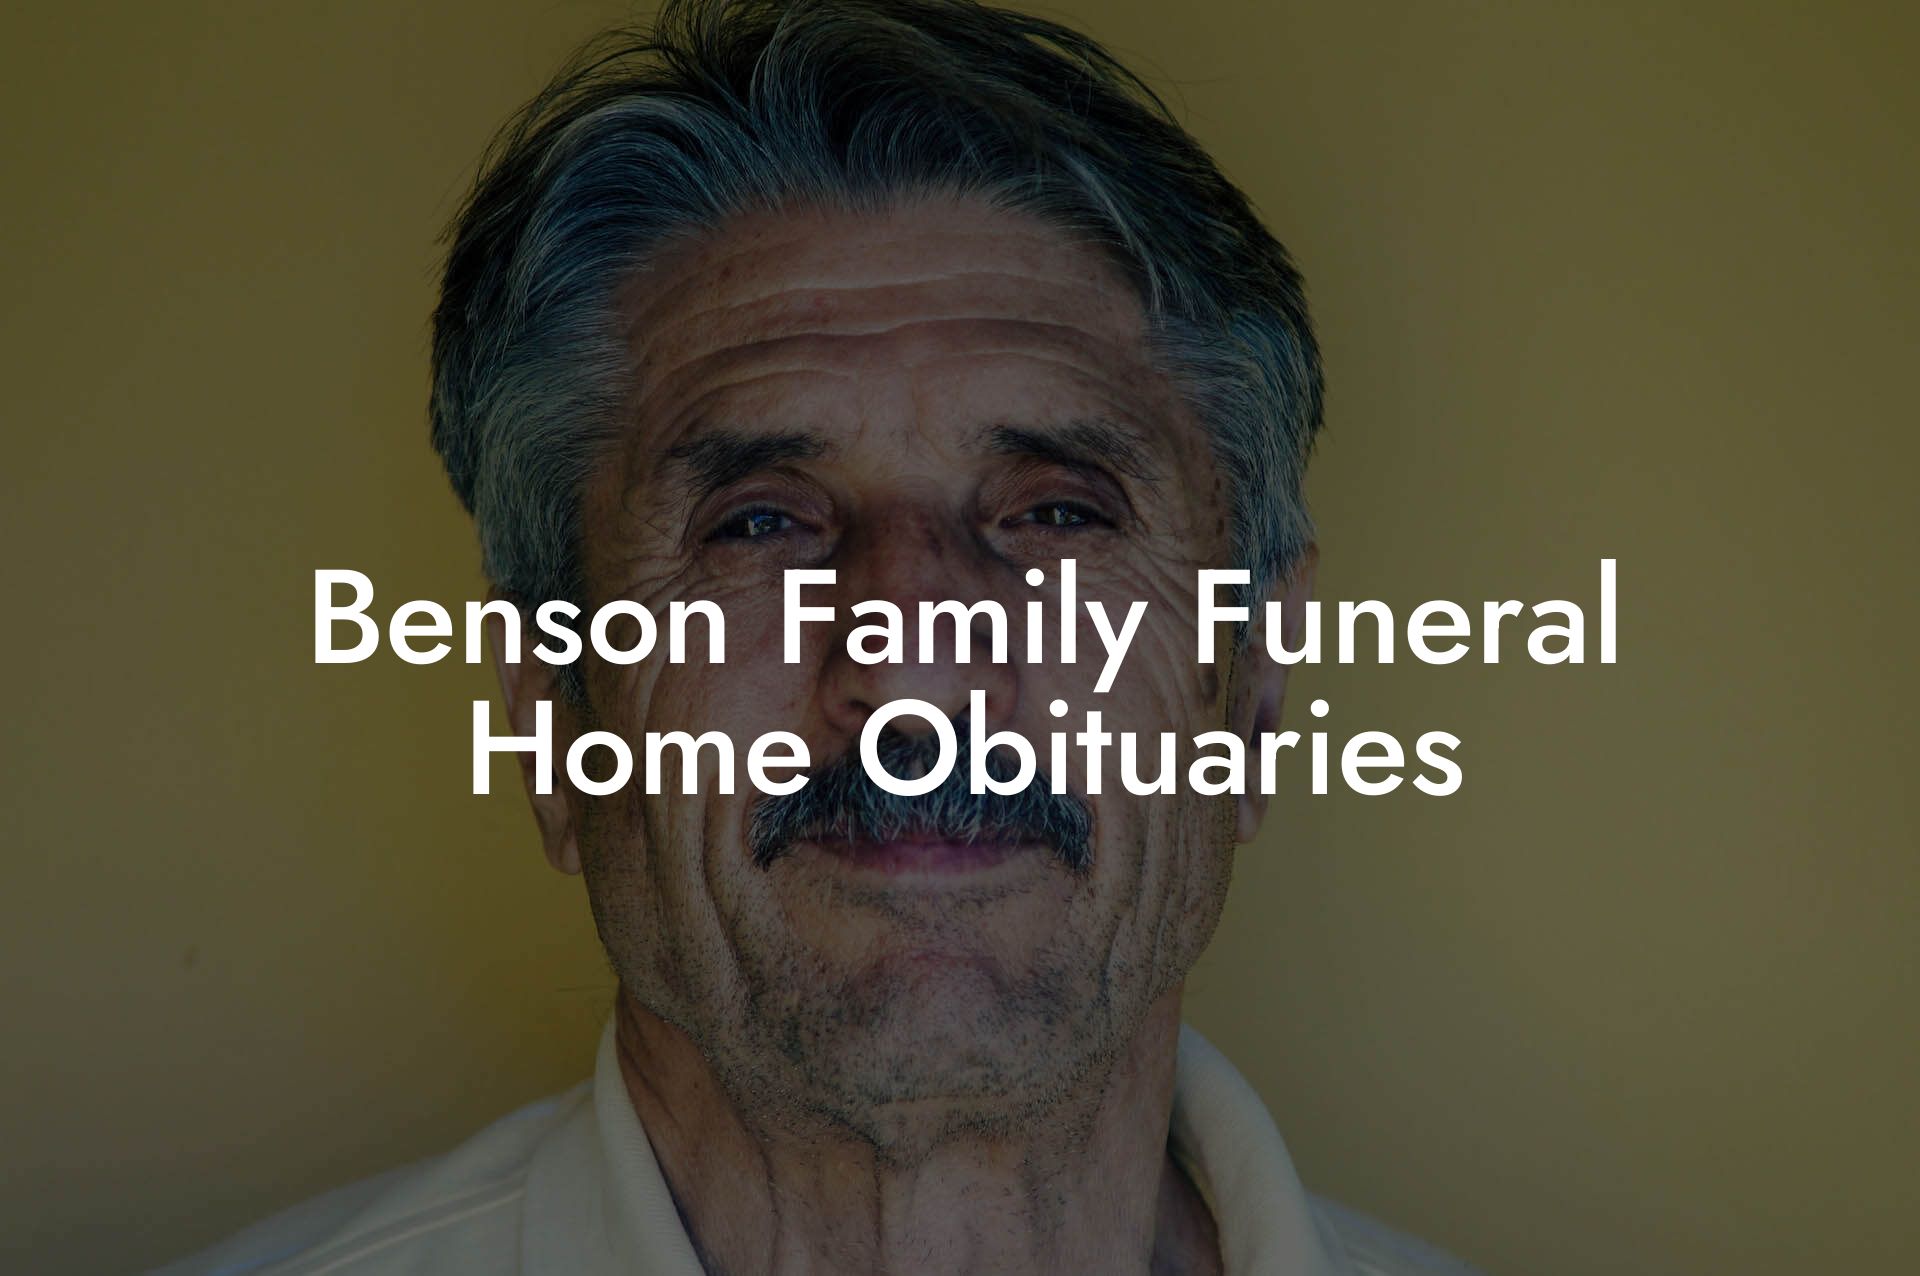 Benson Family Funeral Home Obituaries